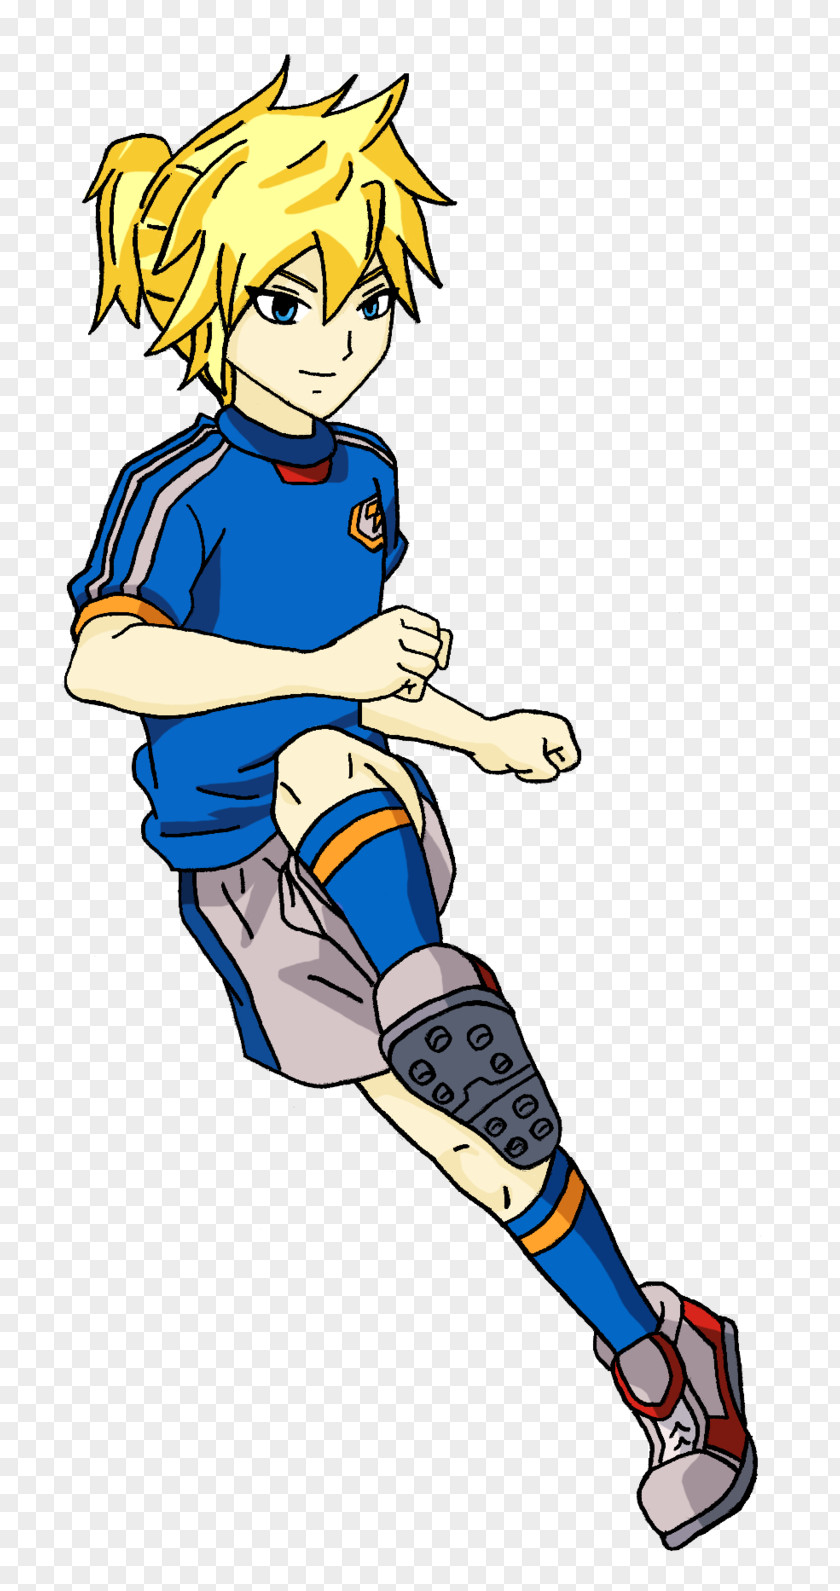 Baseball Shoe Cartoon Character Clip Art PNG